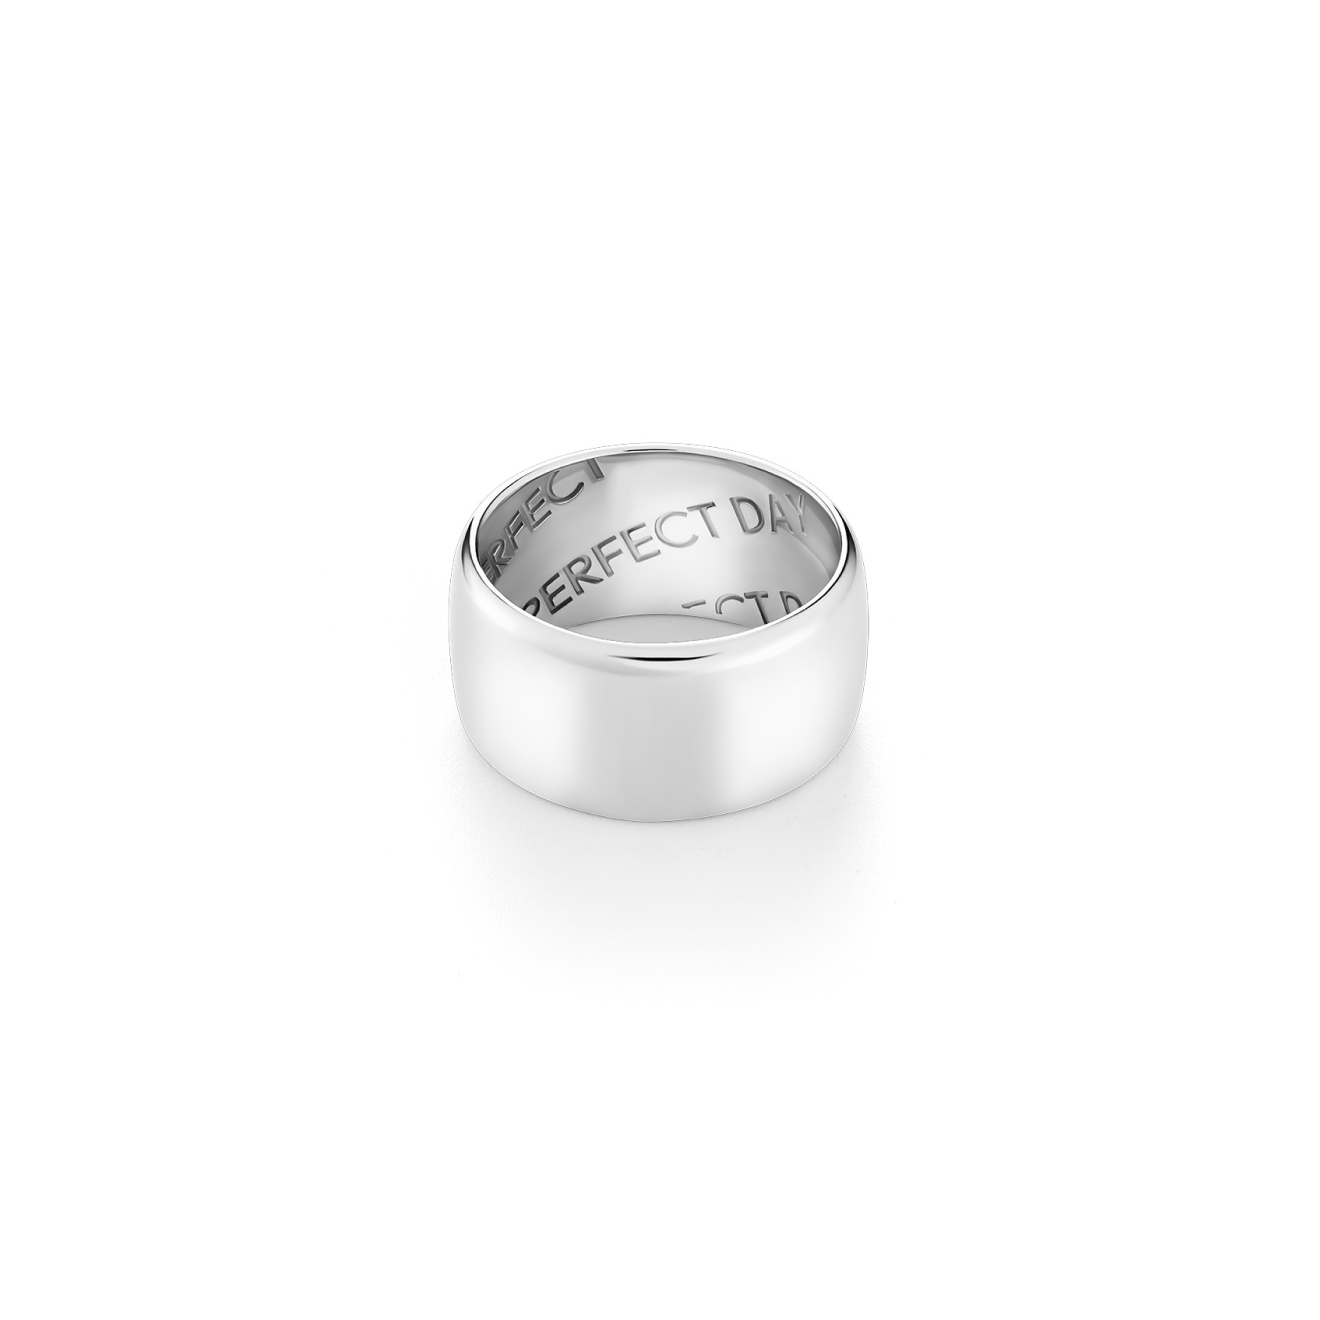 Avgvst Широкое кольцо из серебра PERFECT DAY phosphor широкое фактурное кольцо ccs из серебра